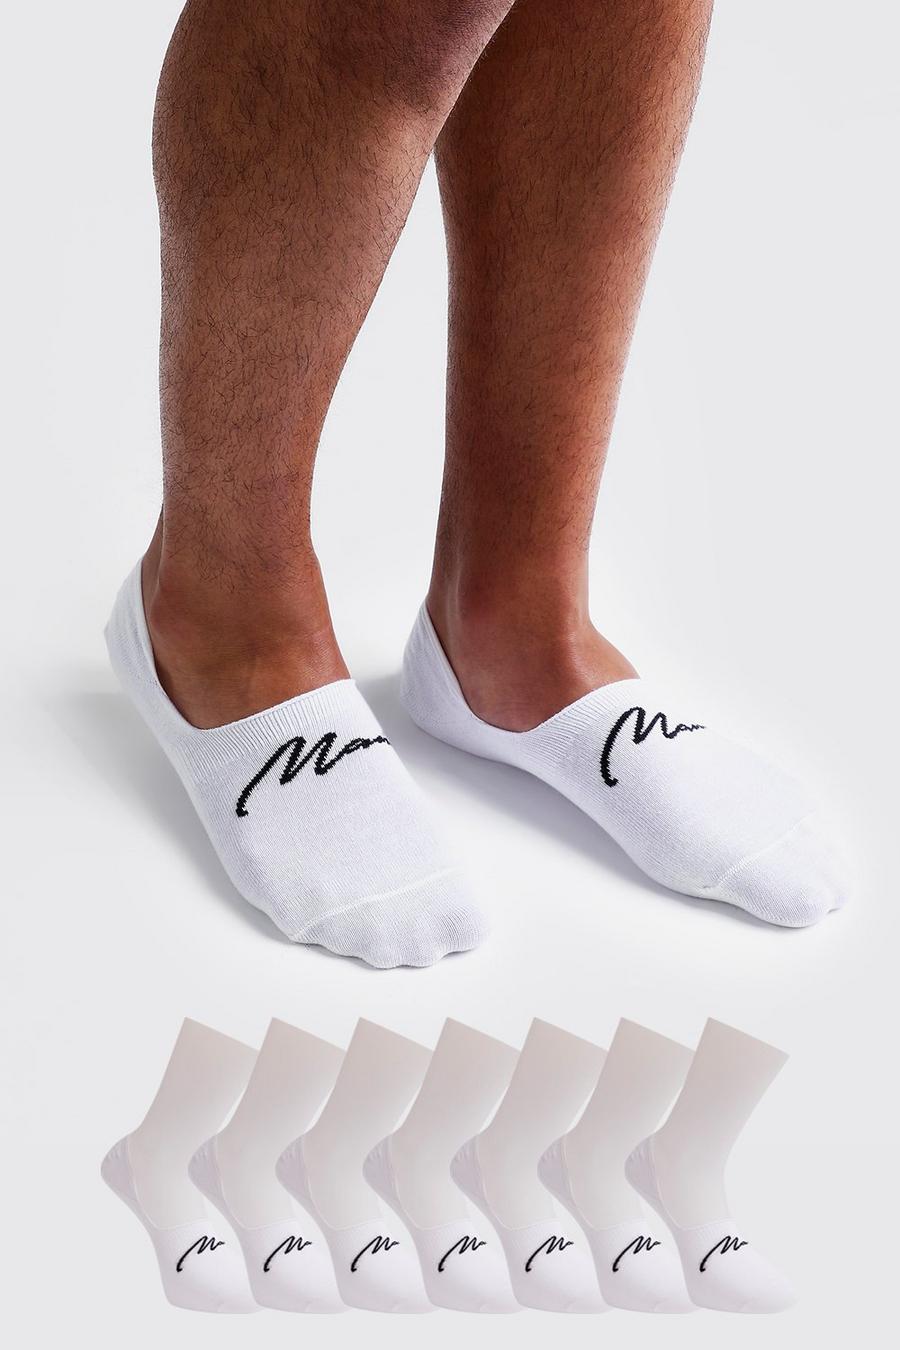 Pack de 7 pares de calcetines invisibles con firma MAN, Blanco bianco